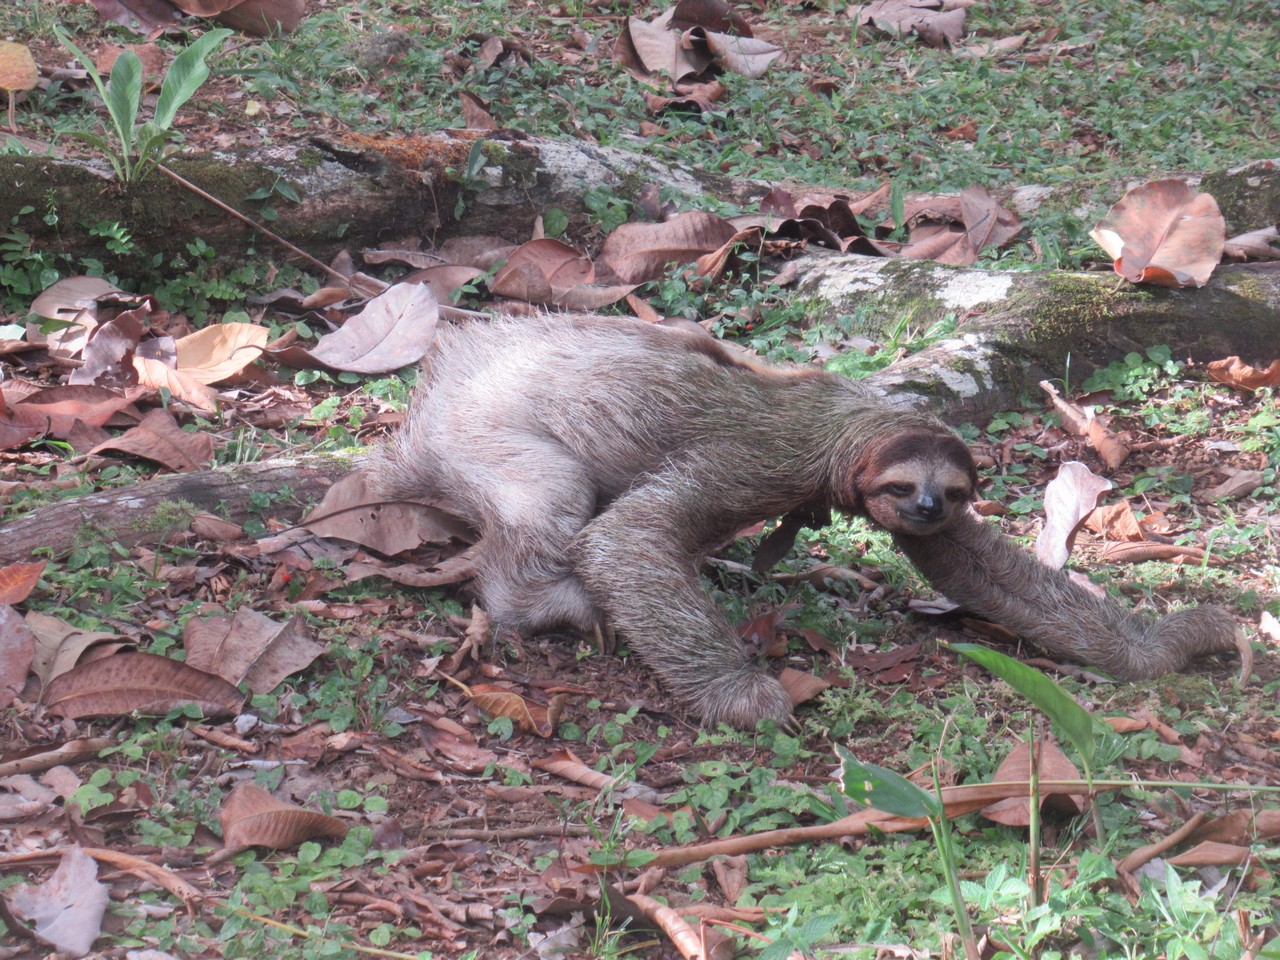 Ground sloth.